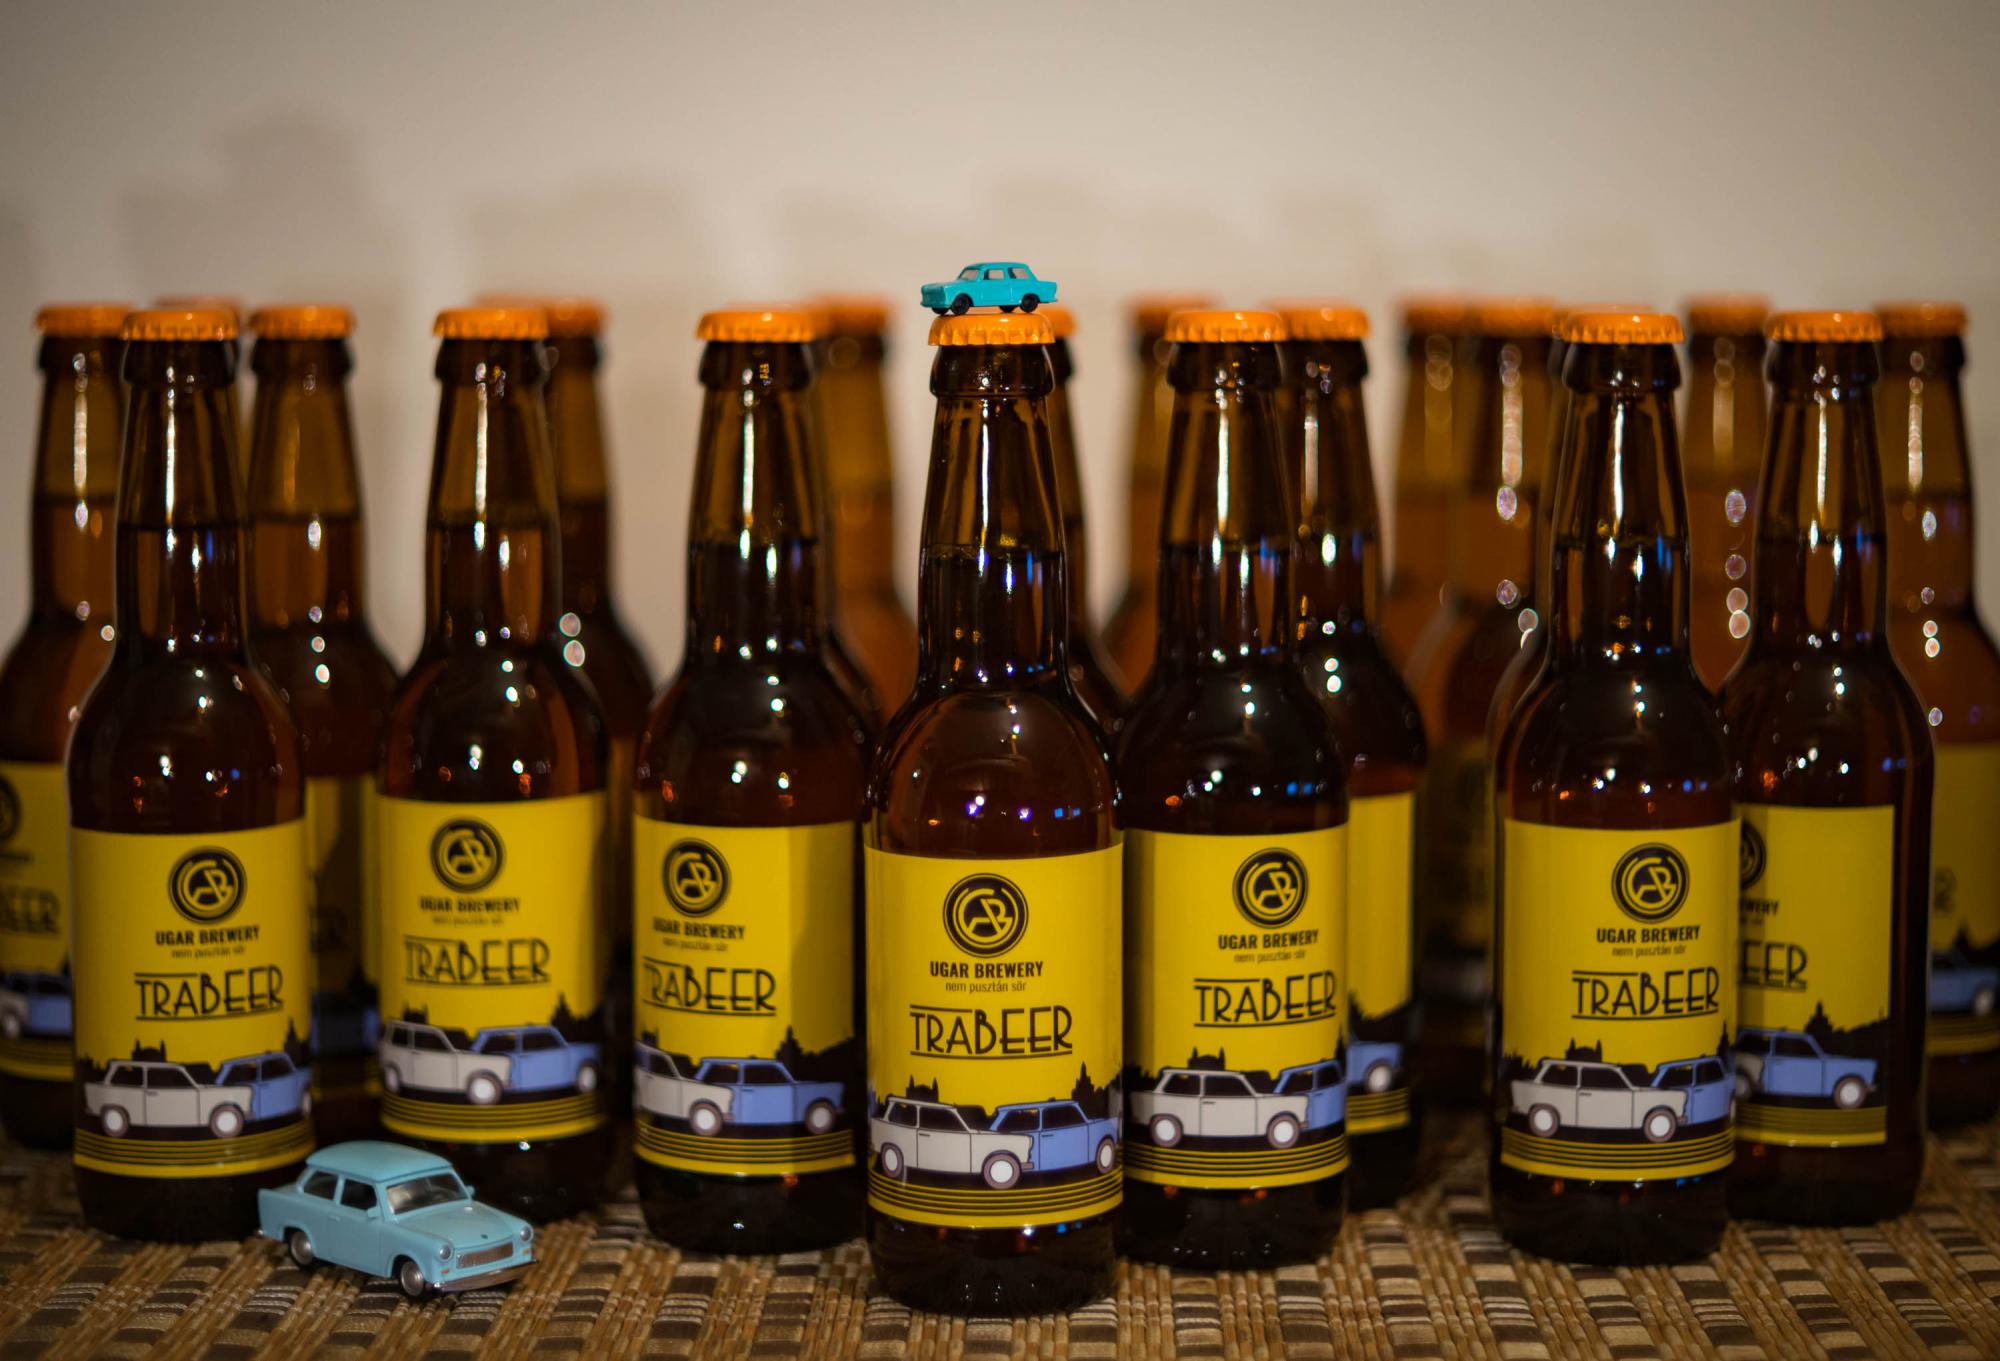 Ugar Brewery - TraBeer játék